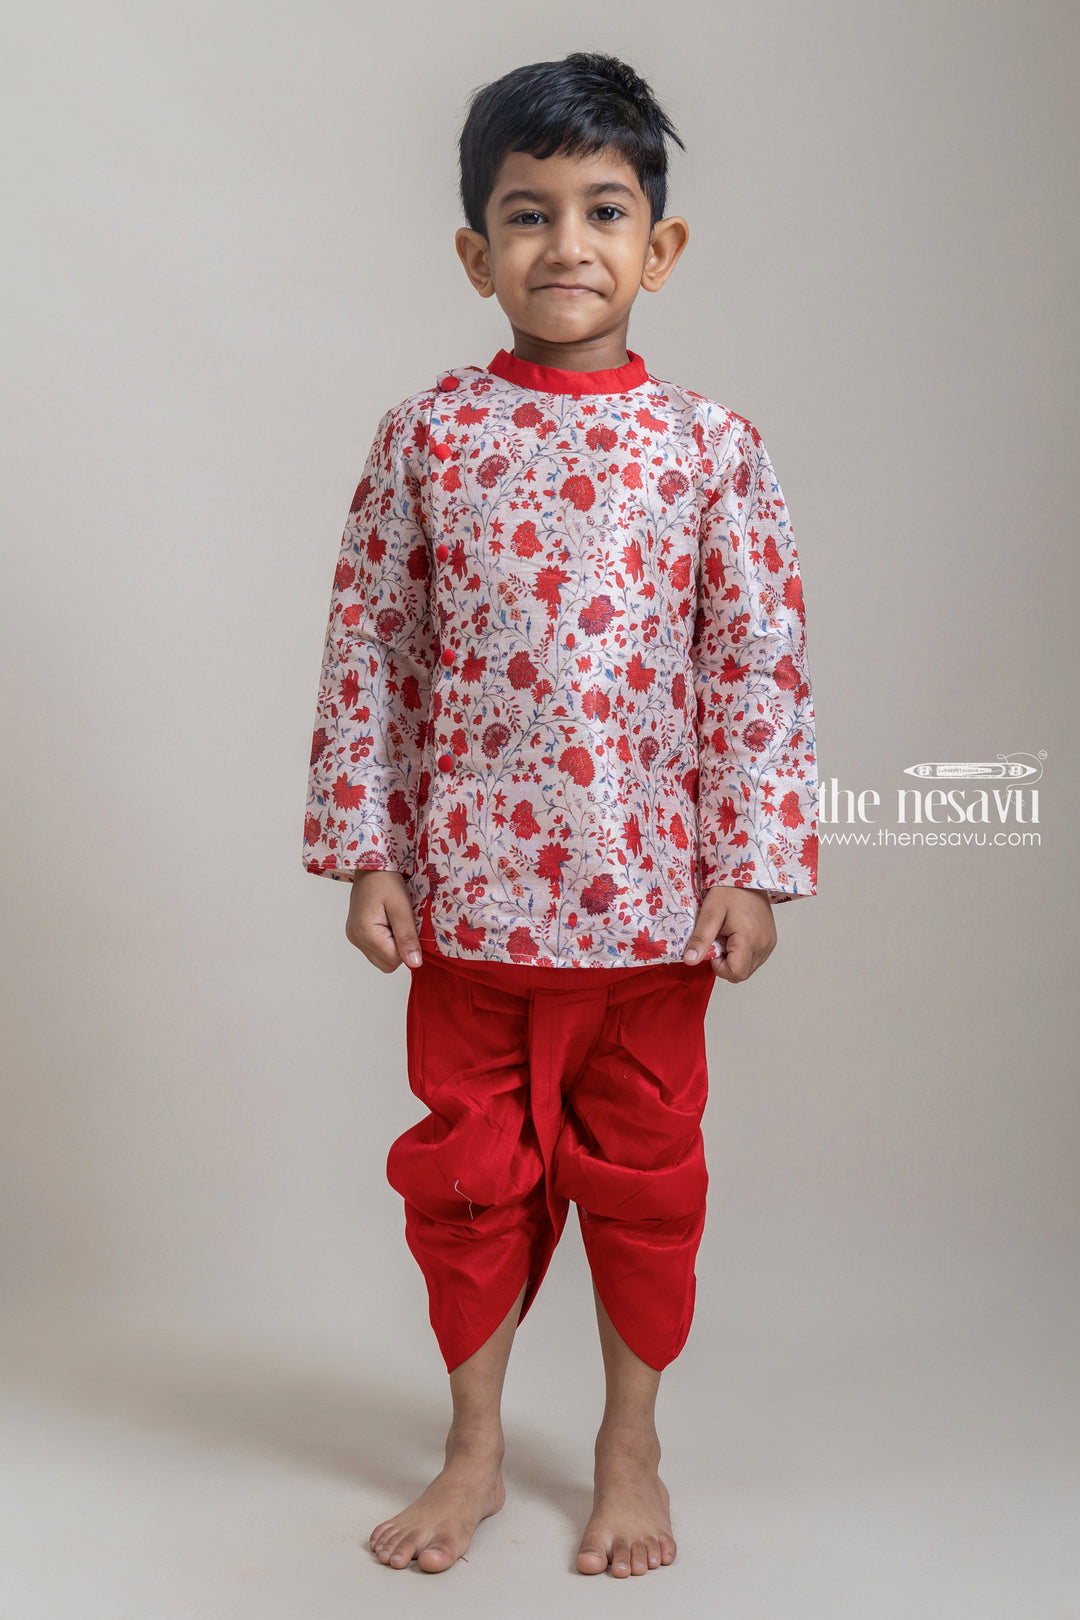 The Nesavu Boys Dothi Set Adorable Red Floral Printed Cotton Kurta Set For Little Boys Nesavu 14 (6M) / Red / Semi Silk BES324A-14 Boys Cotton Kurta Set | Latest Boys Kurta Collection | The Nesavu